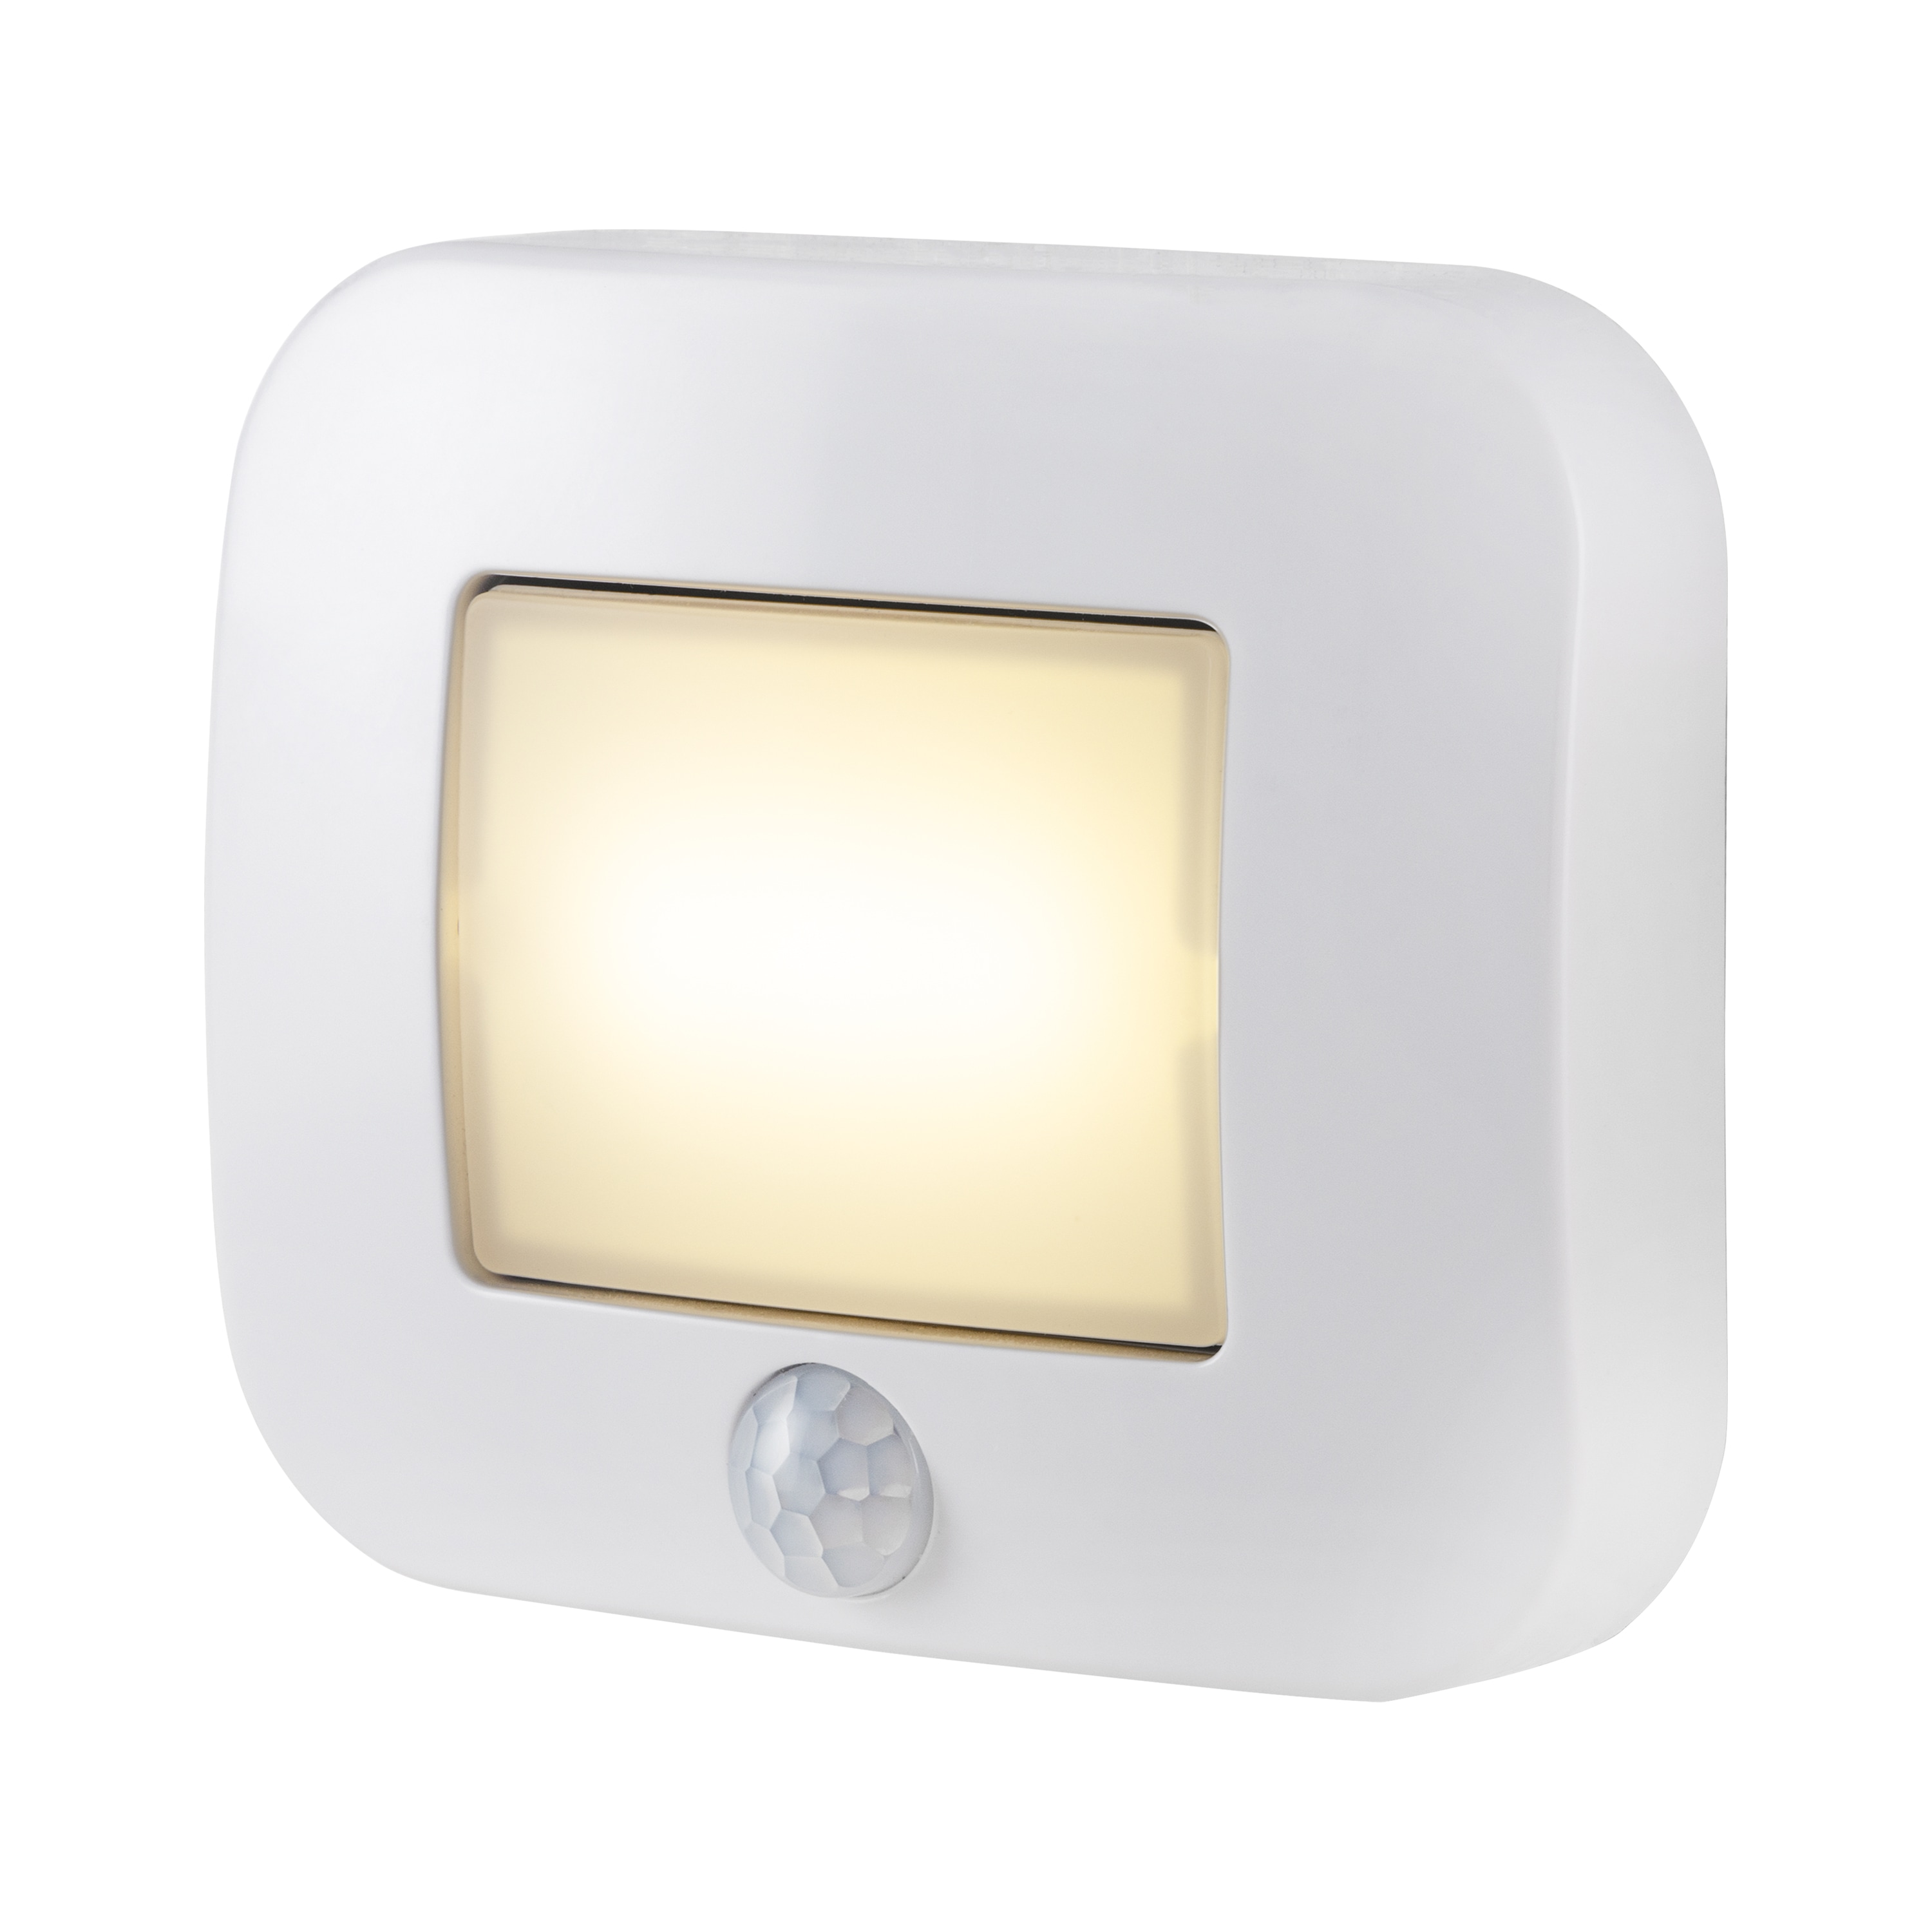 2 Pack LED Night Light Dusk to Dawn Light Sensor,UK Plug in Square,Yellow 